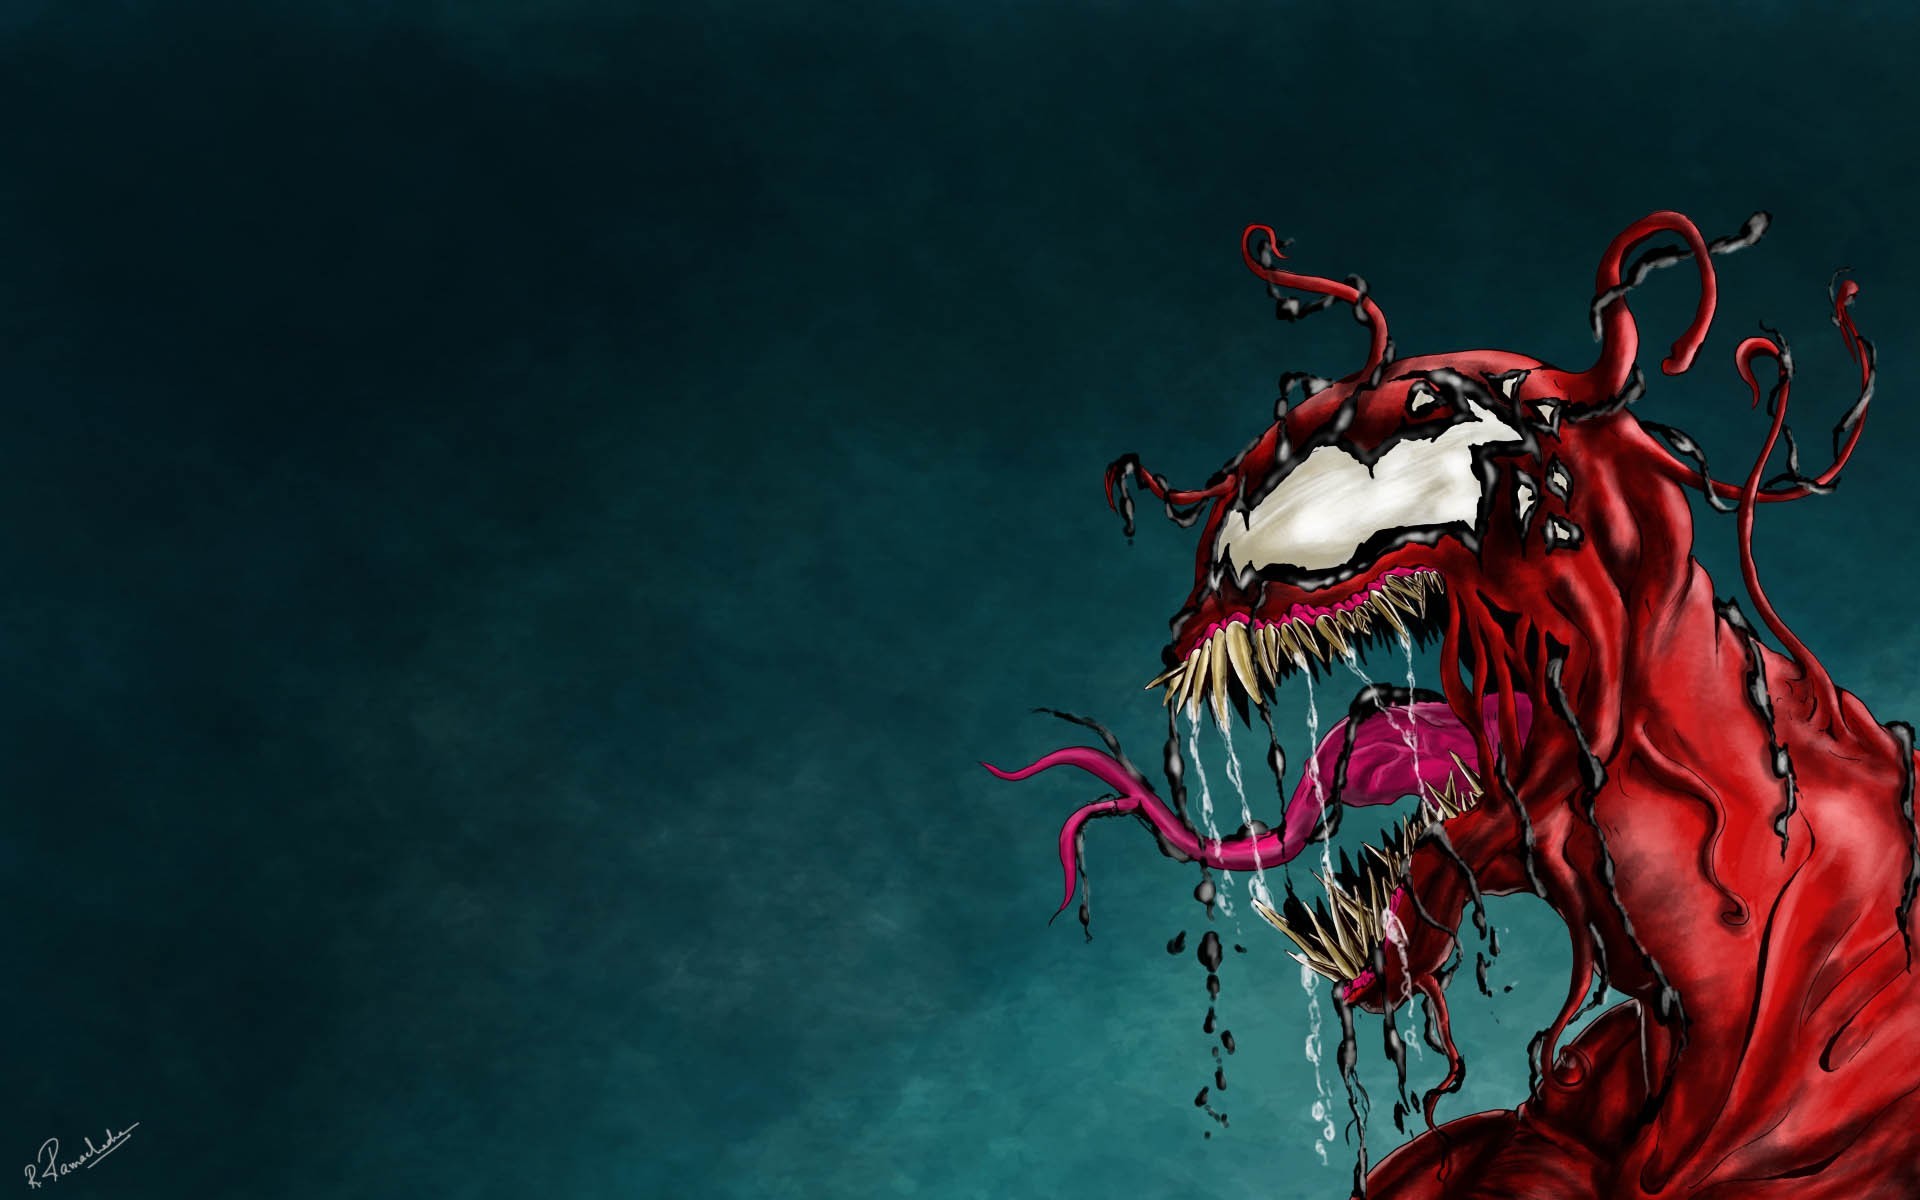 Spiderman Venom Carnage Wallpaper Images & Pictures – Becuo